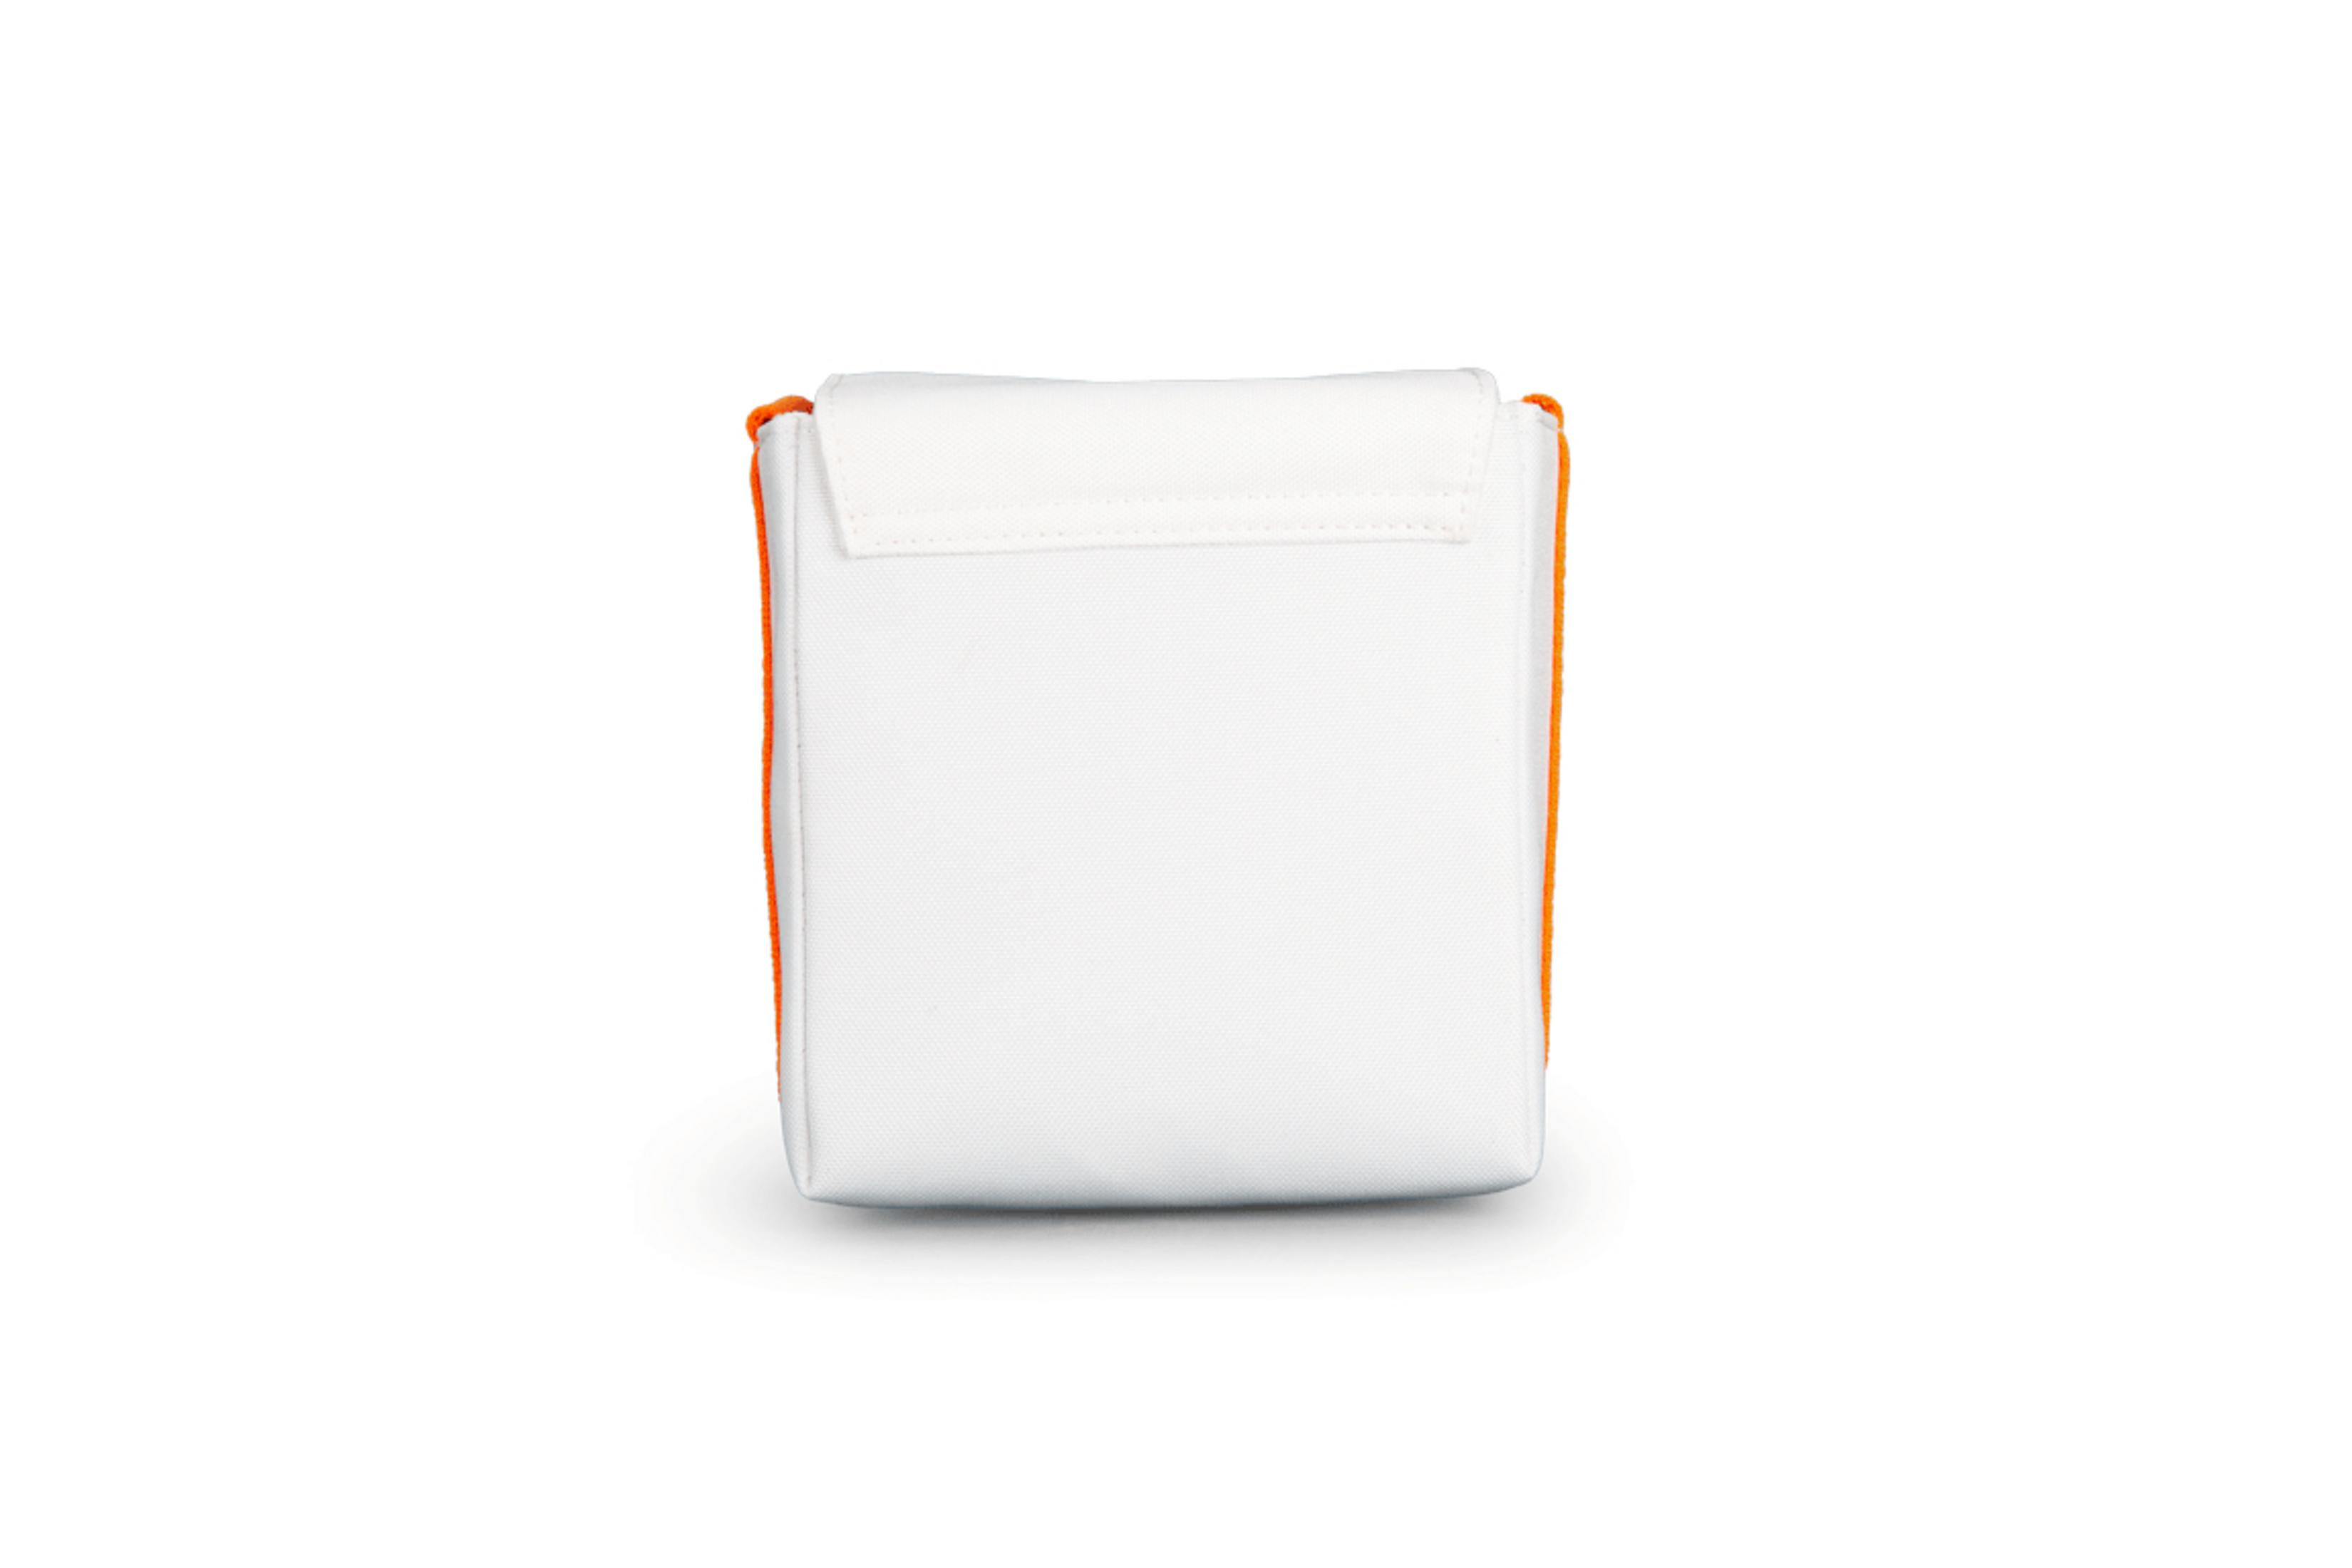 BAG 6101 Weiß/Orange POLAROID Kameratasche, NOW ORANGE WHITE &